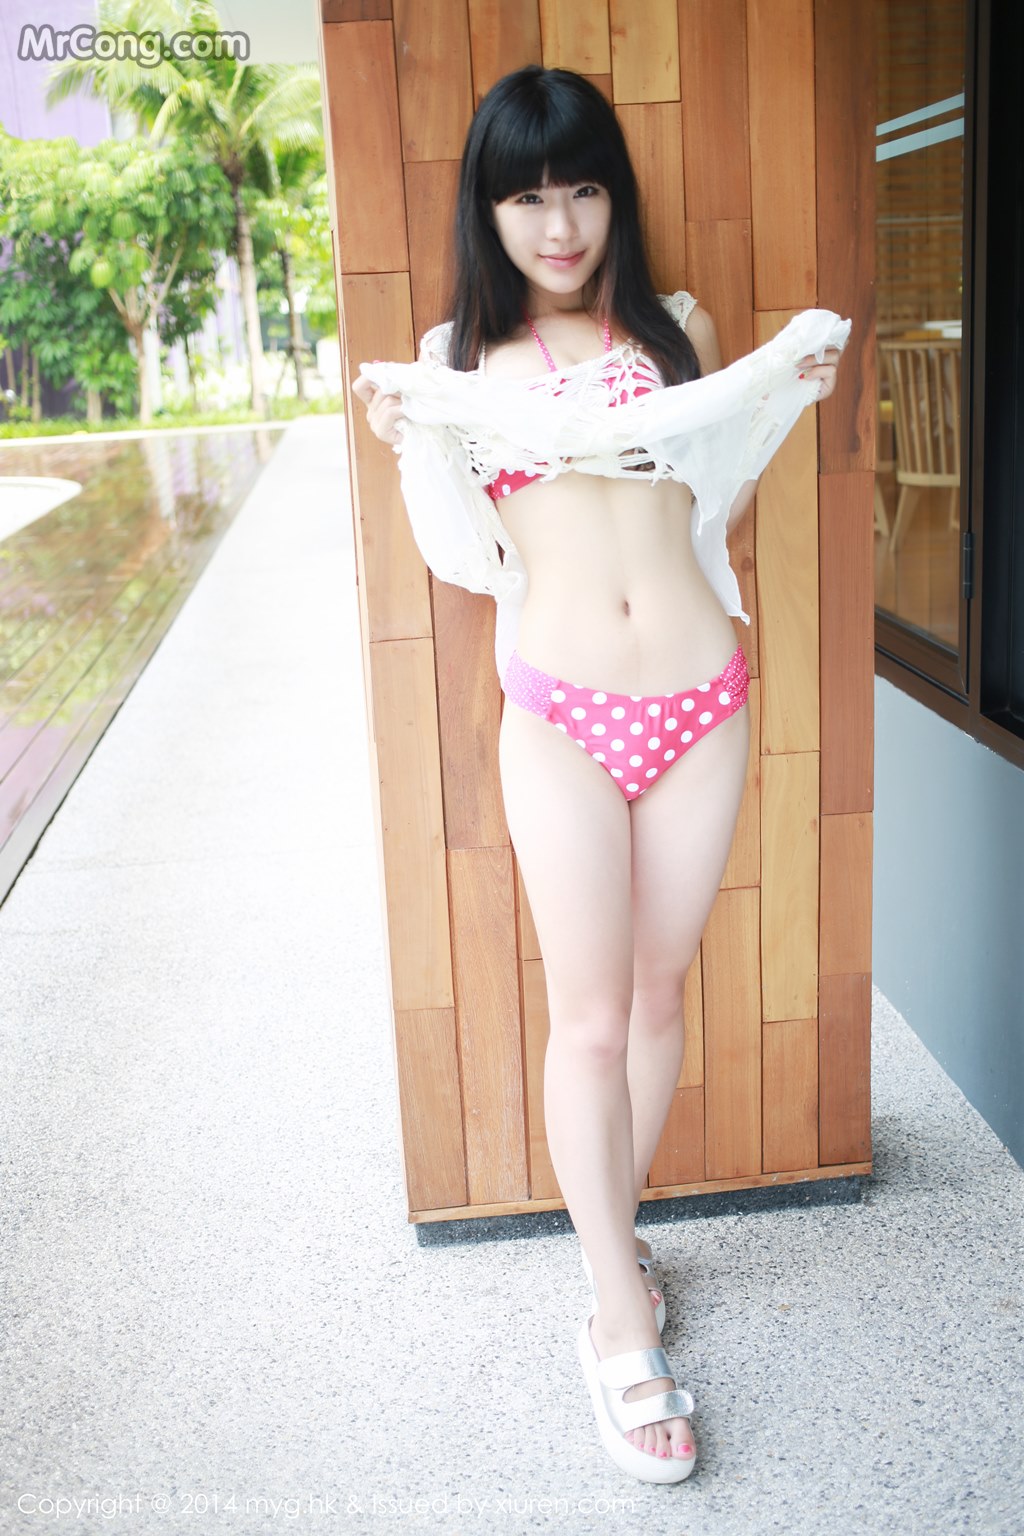 MyGirl Vol.019: Verna Model (刘雪 妮) (63 photos) photo 1-18